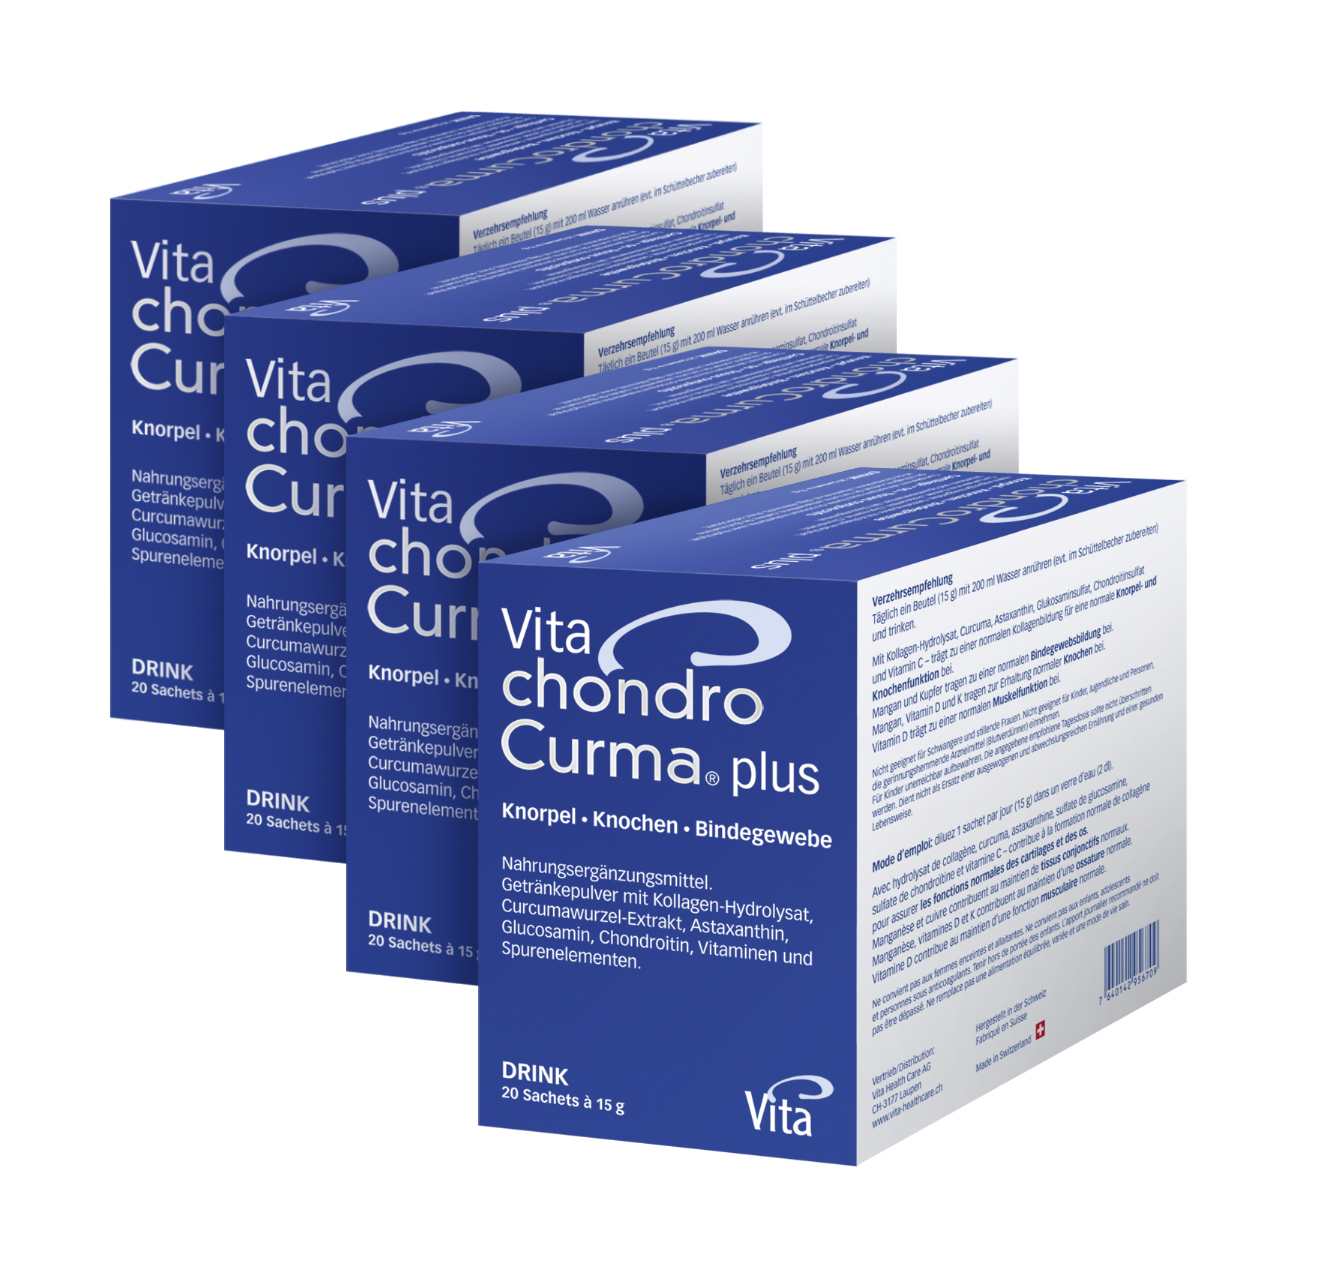 Vita chondroCurma® plus Four pack